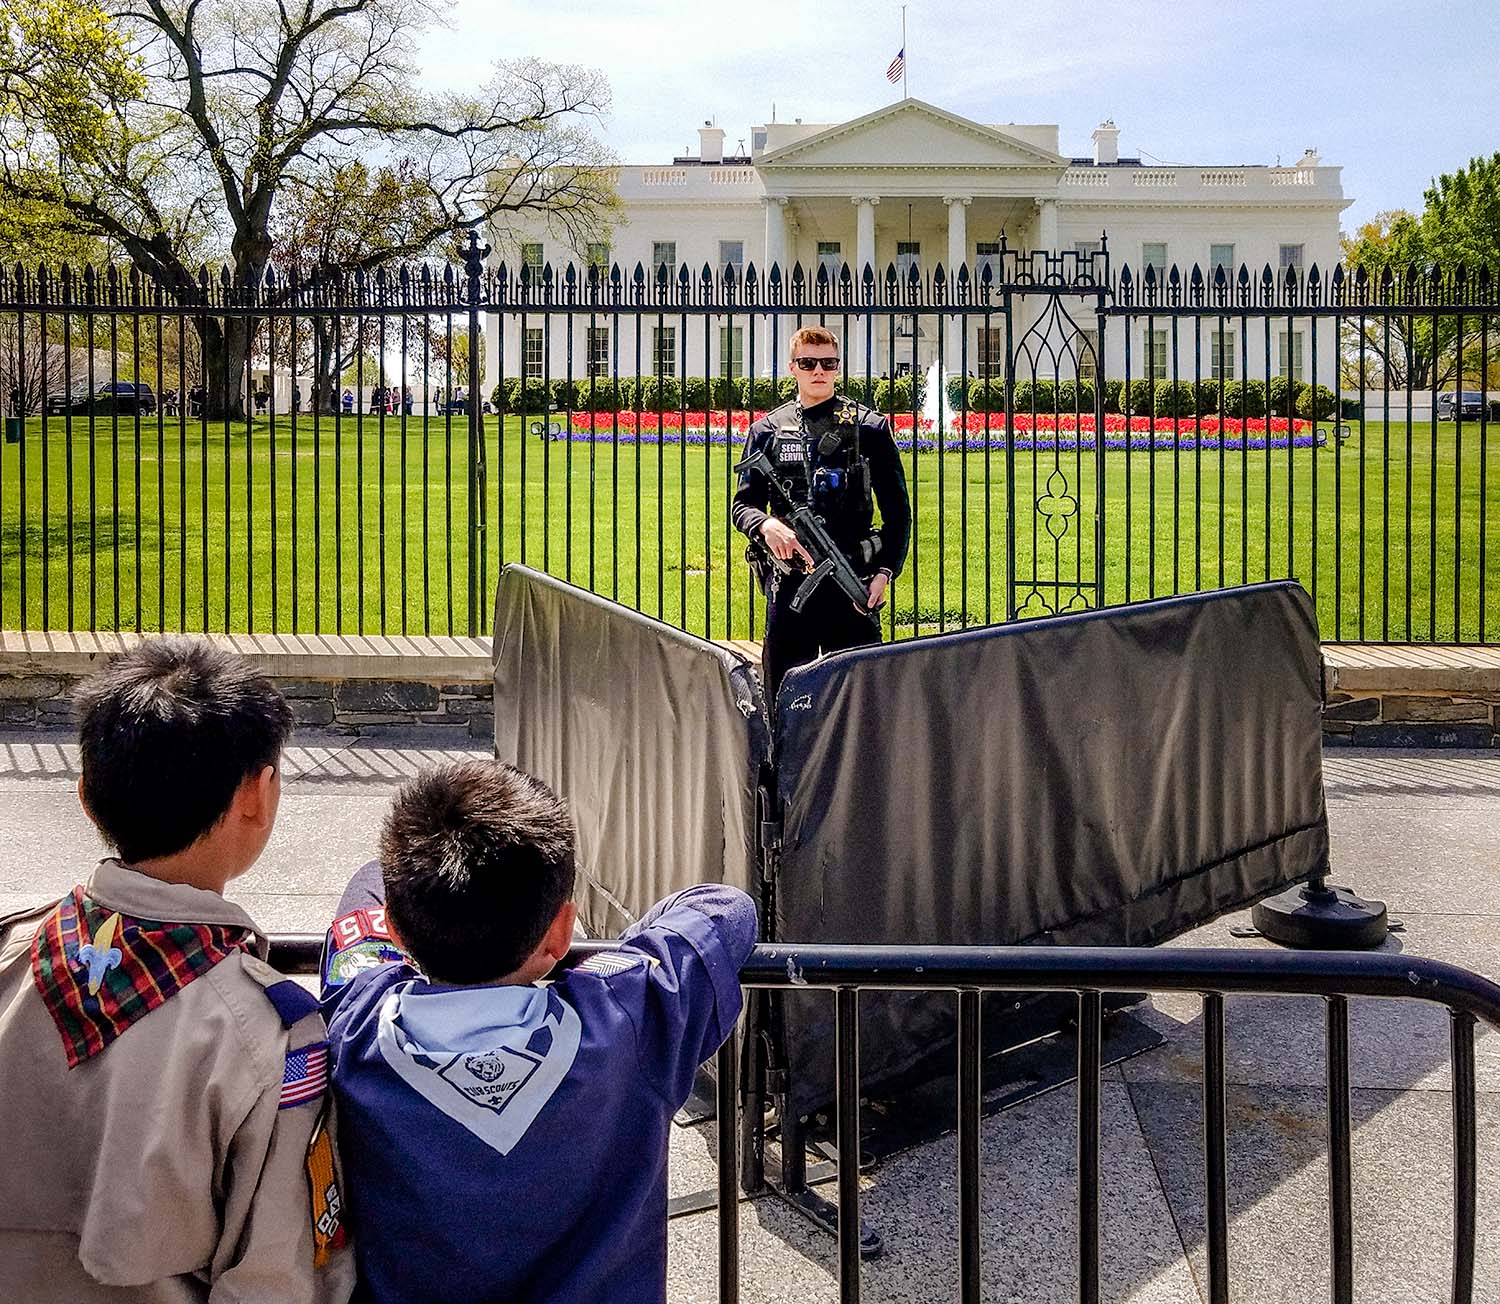     White House, Washington D.C. 2018  